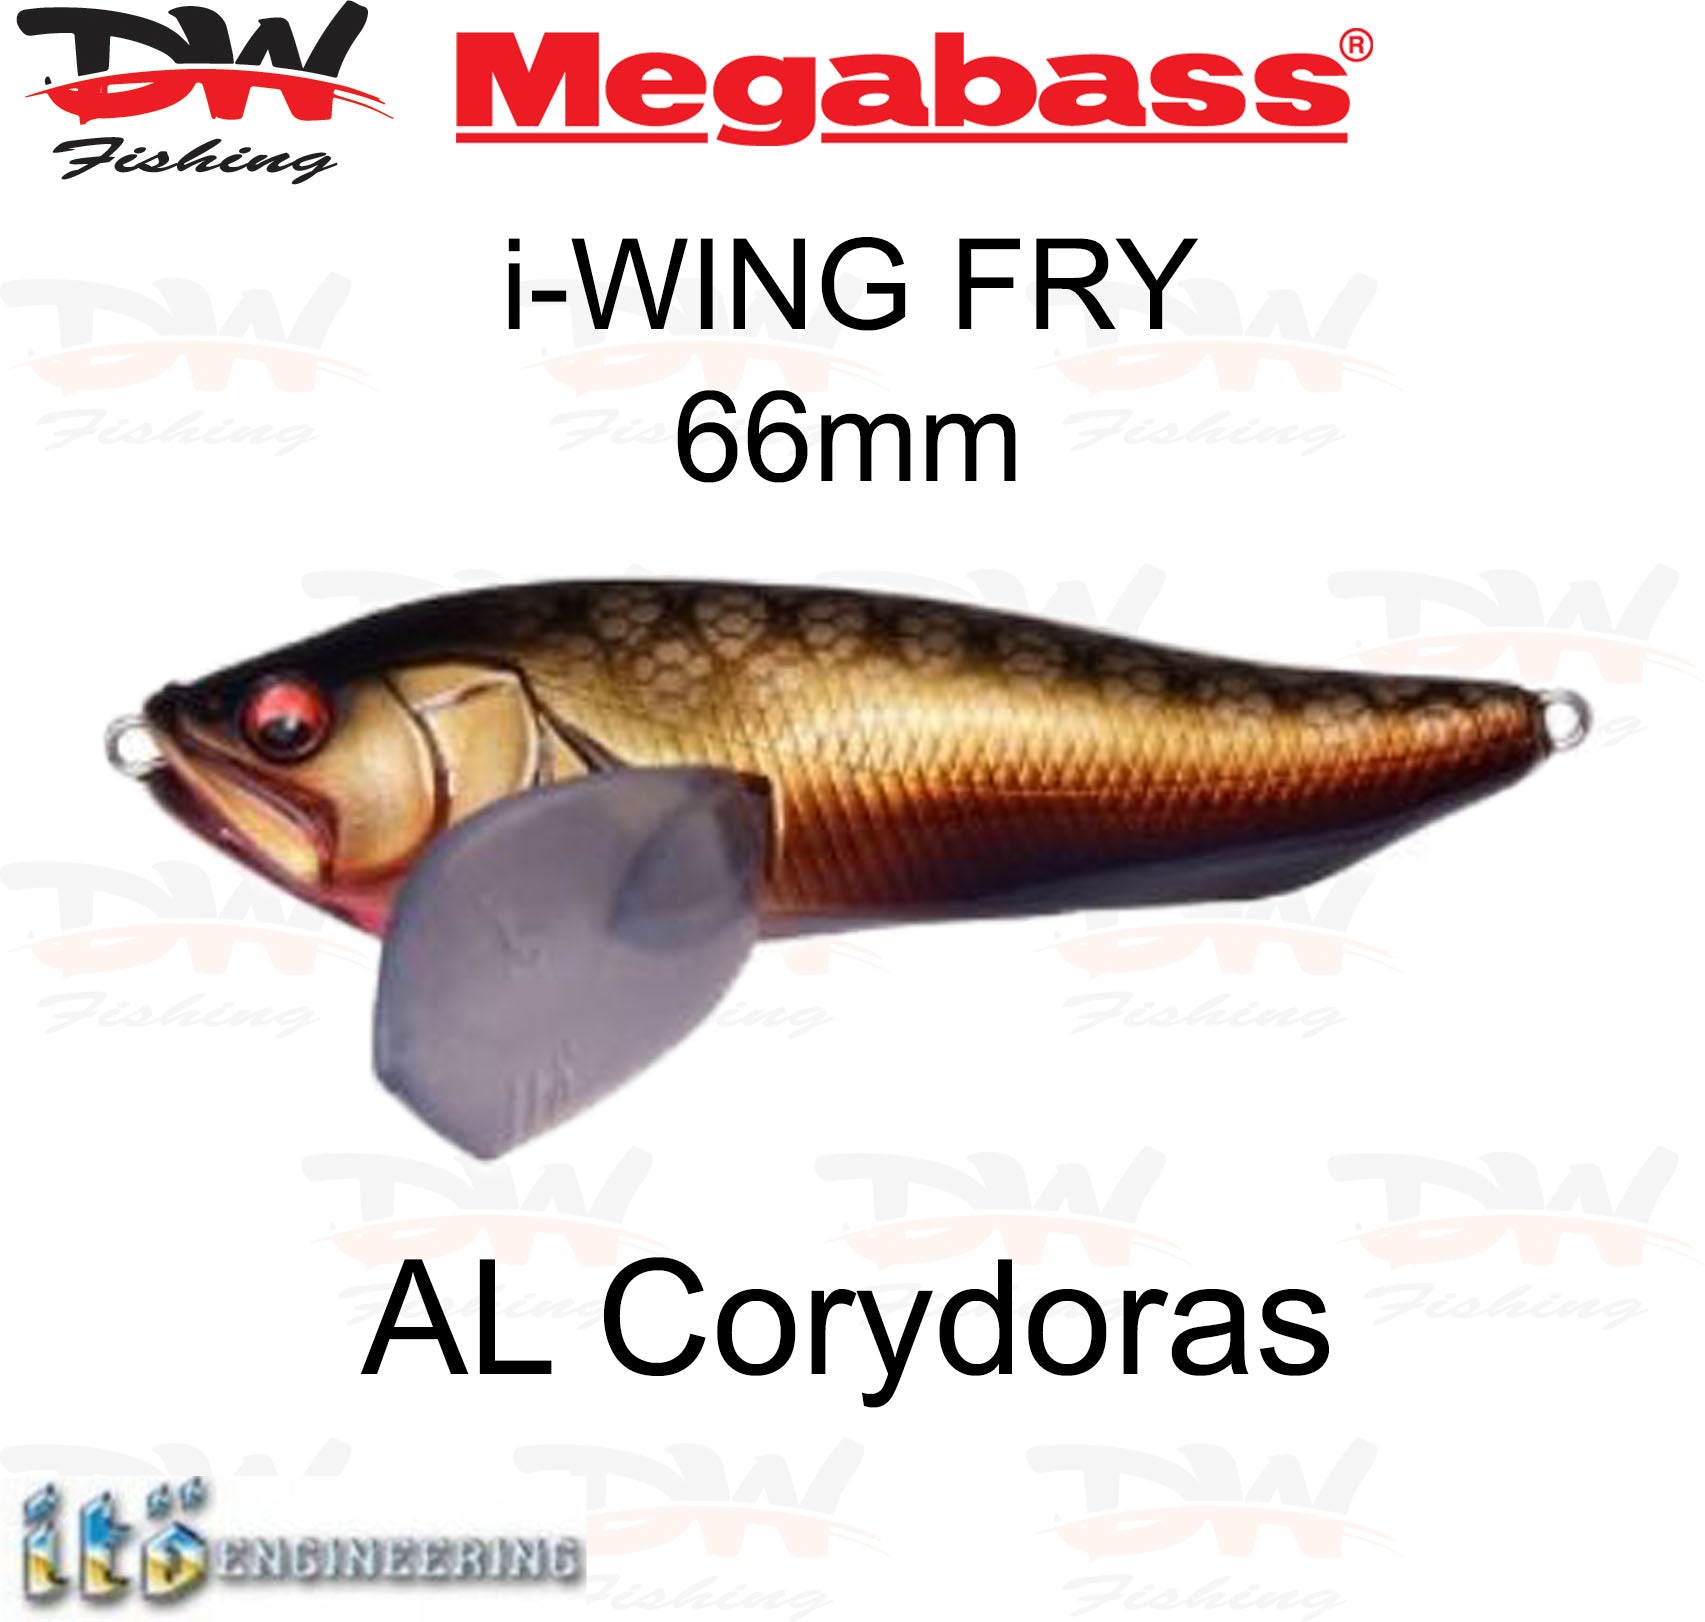 Megabass i-WING FRY surface lure single colour AL Corydoras